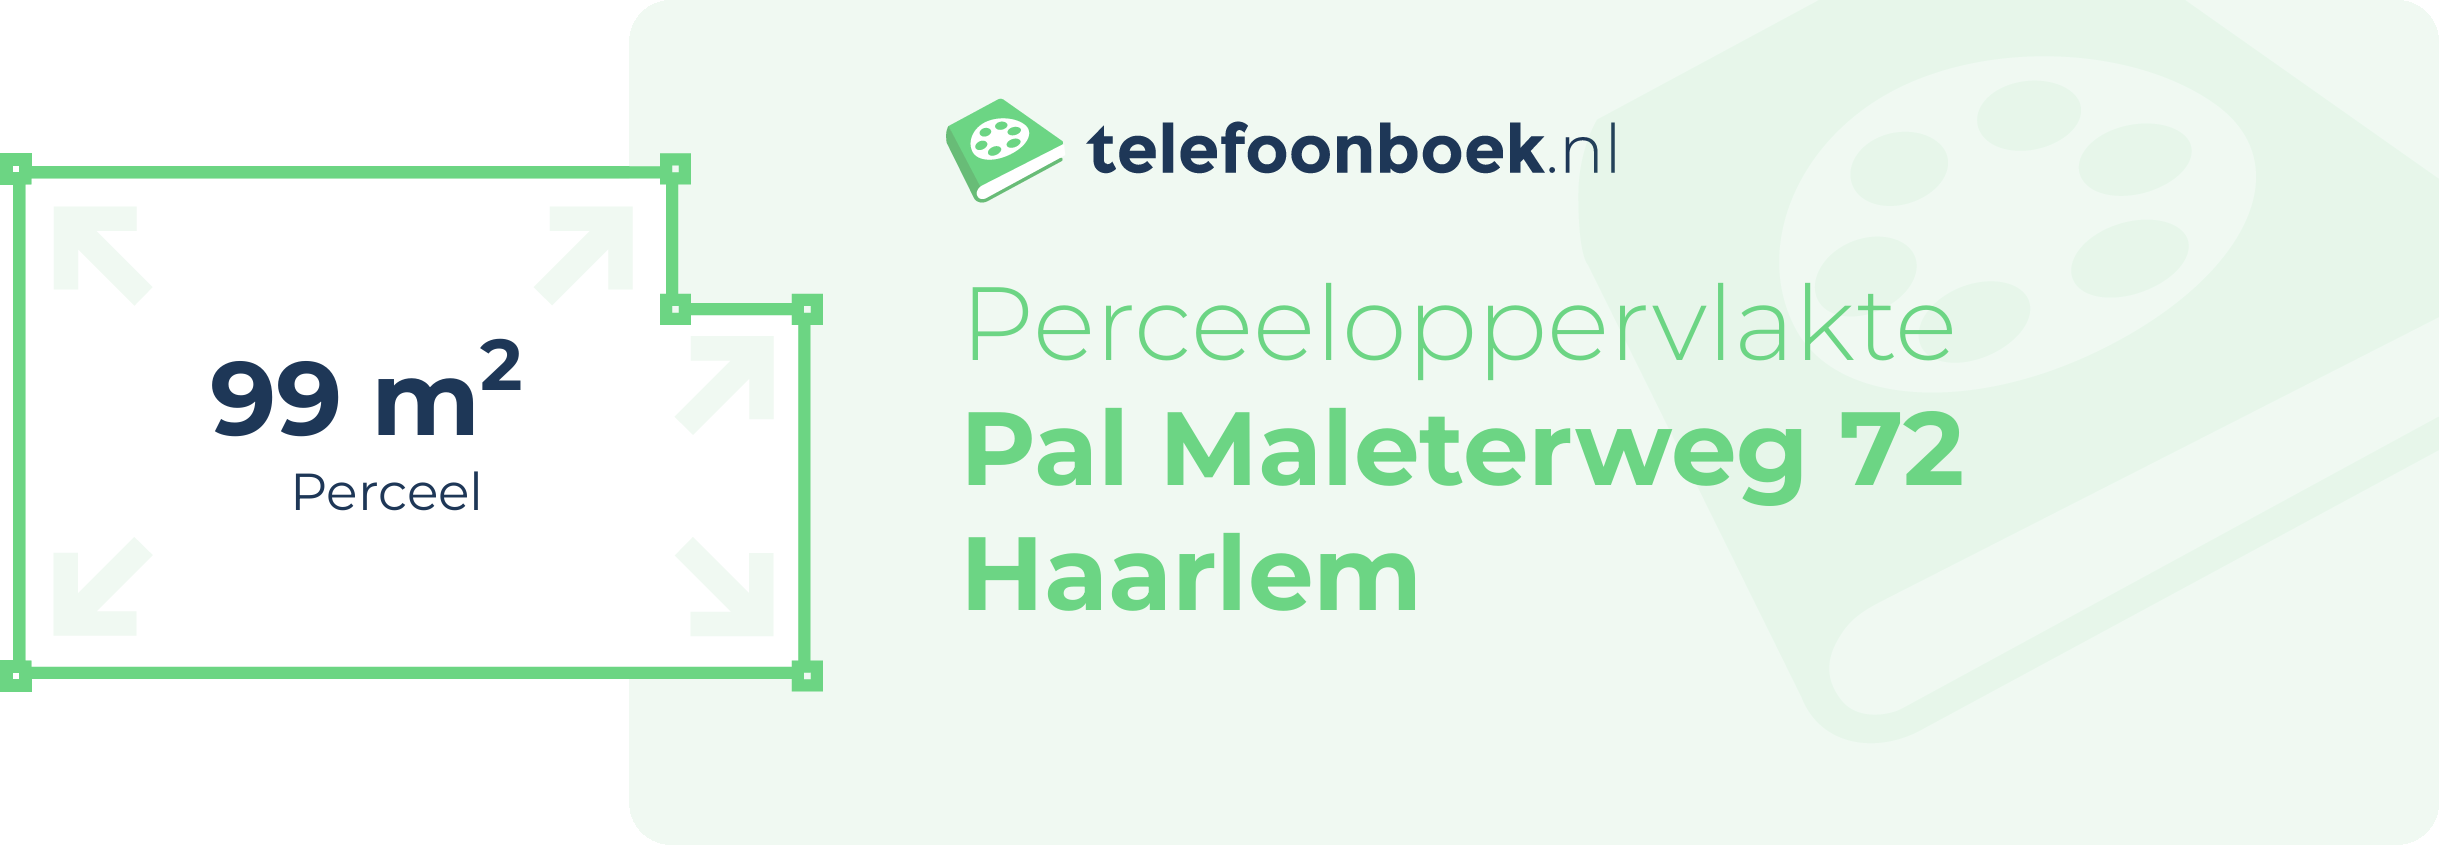 Perceeloppervlakte Pal Maleterweg 72 Haarlem